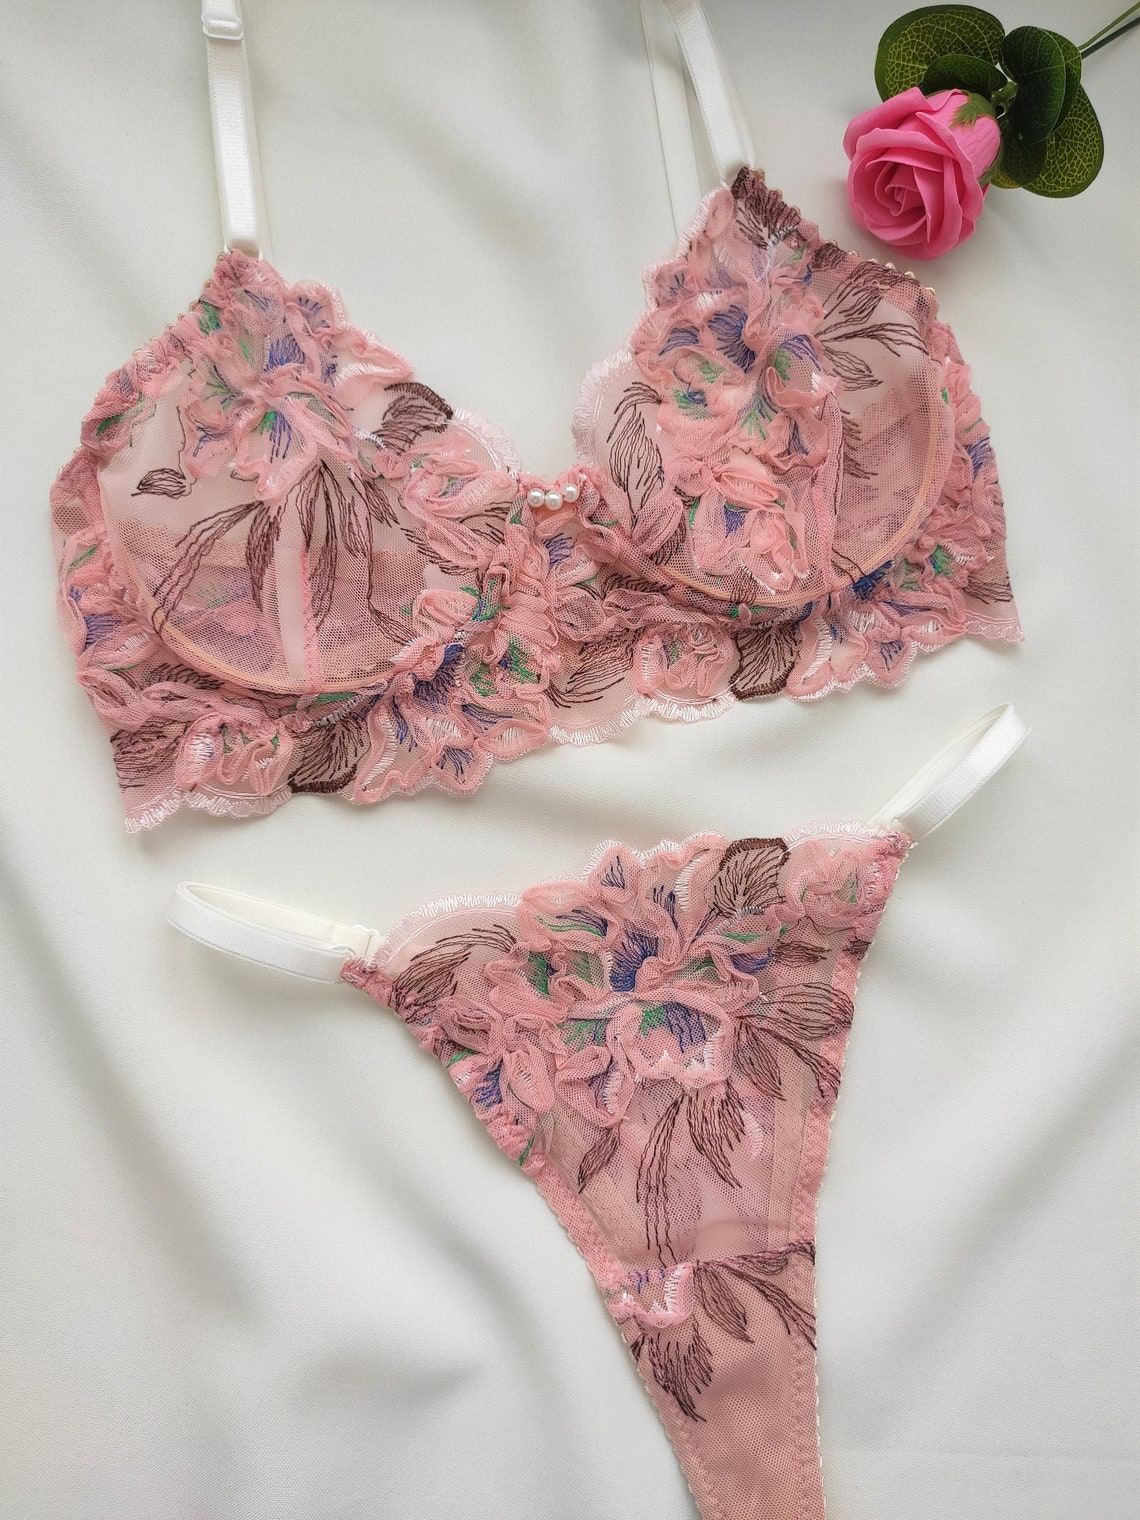 Flower embroidered lingerie setPink lace lingerie | Etsy